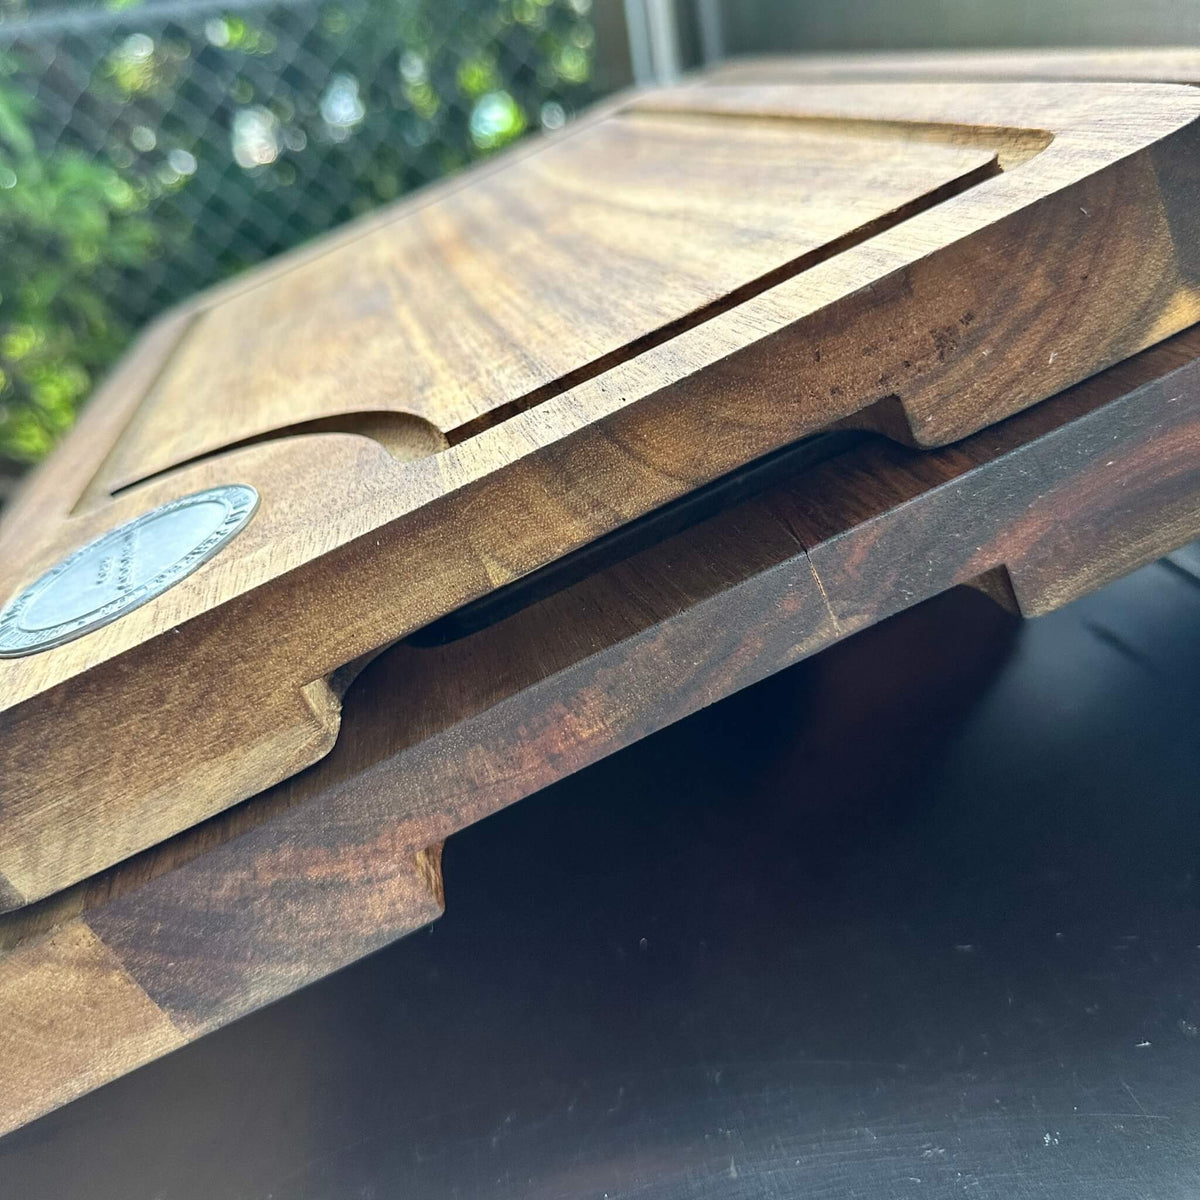 Tagwood BBQ Edge-Grain Cutting &amp; Carving Board